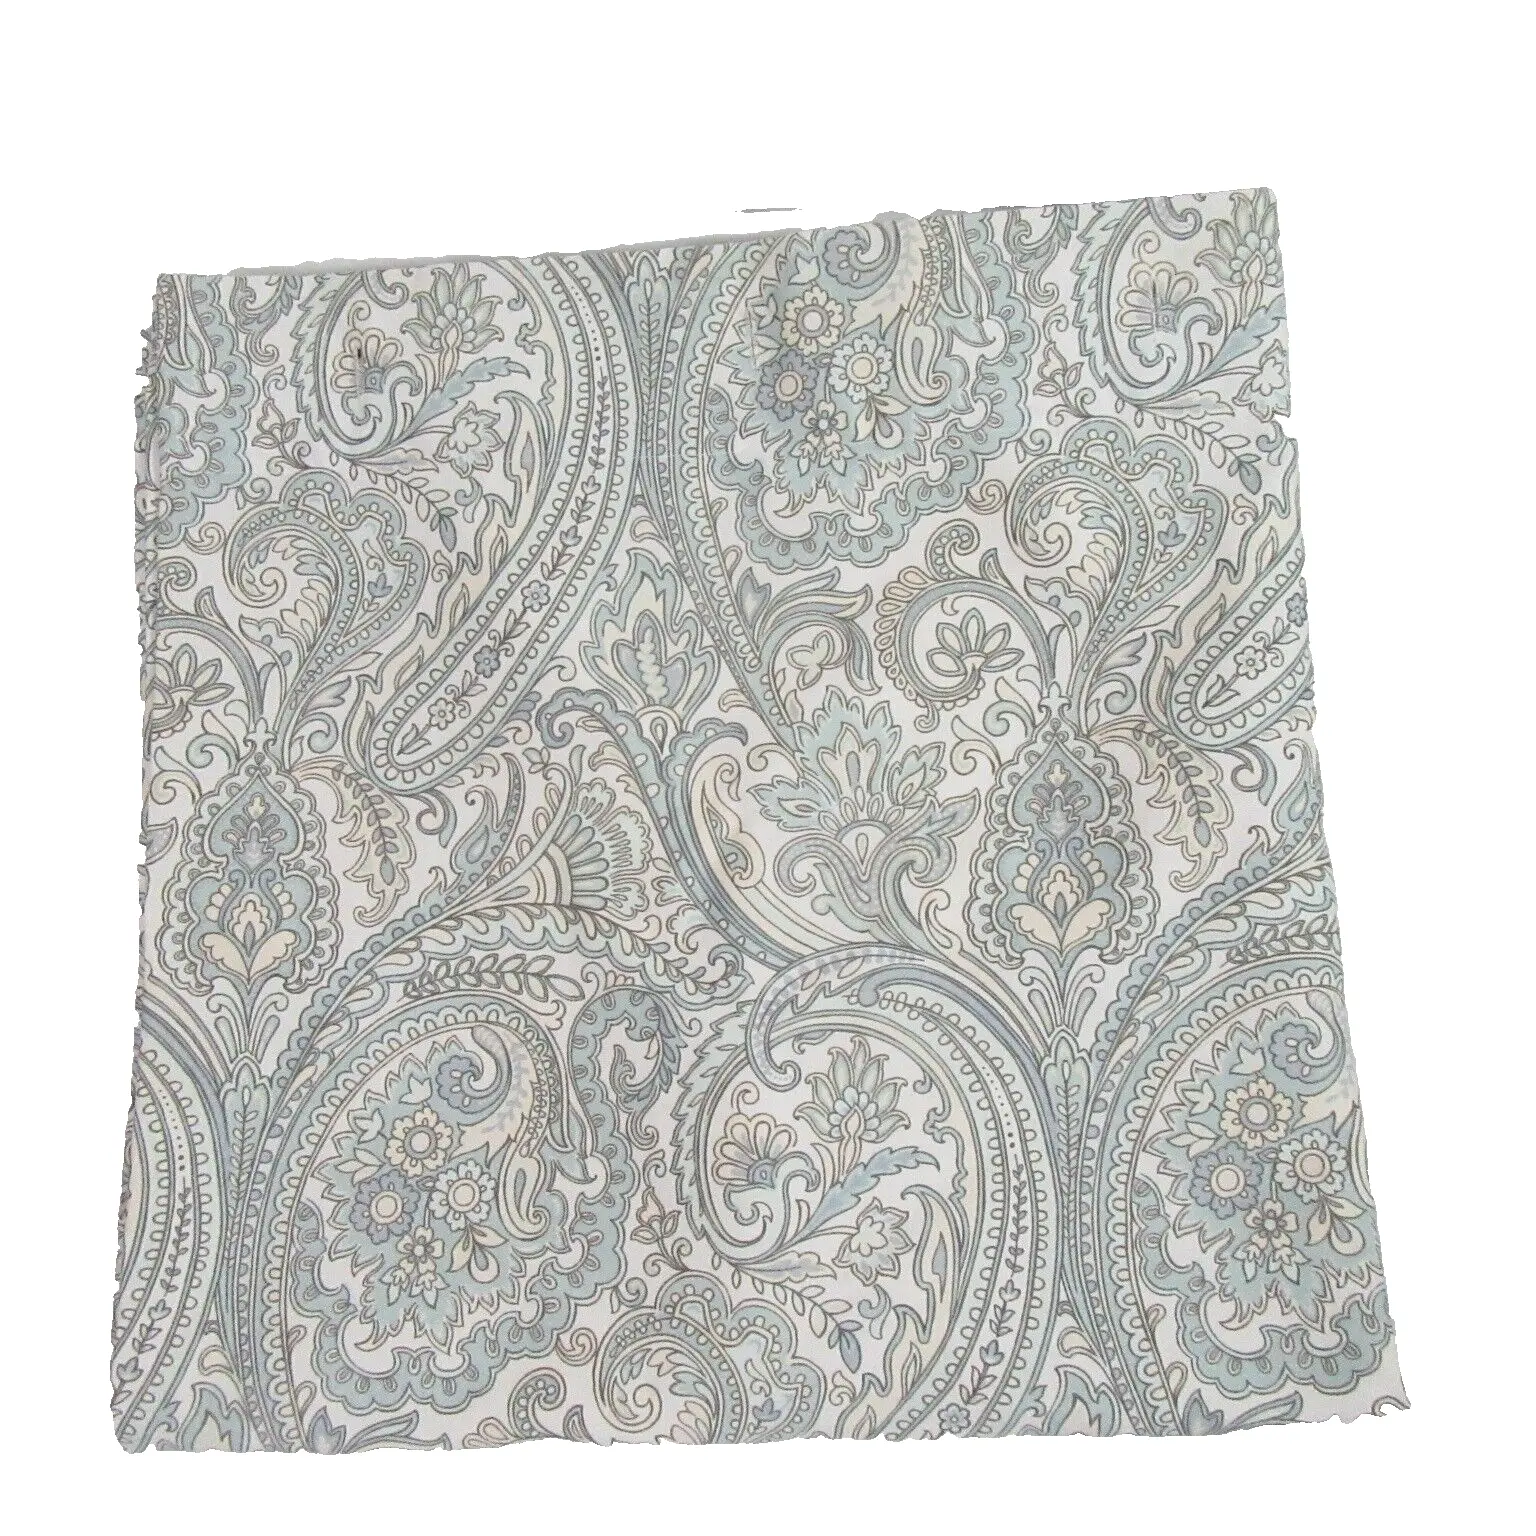 DOMAIN Paisley Medallion Pale Blue Multi Shower Curtain - $36.00